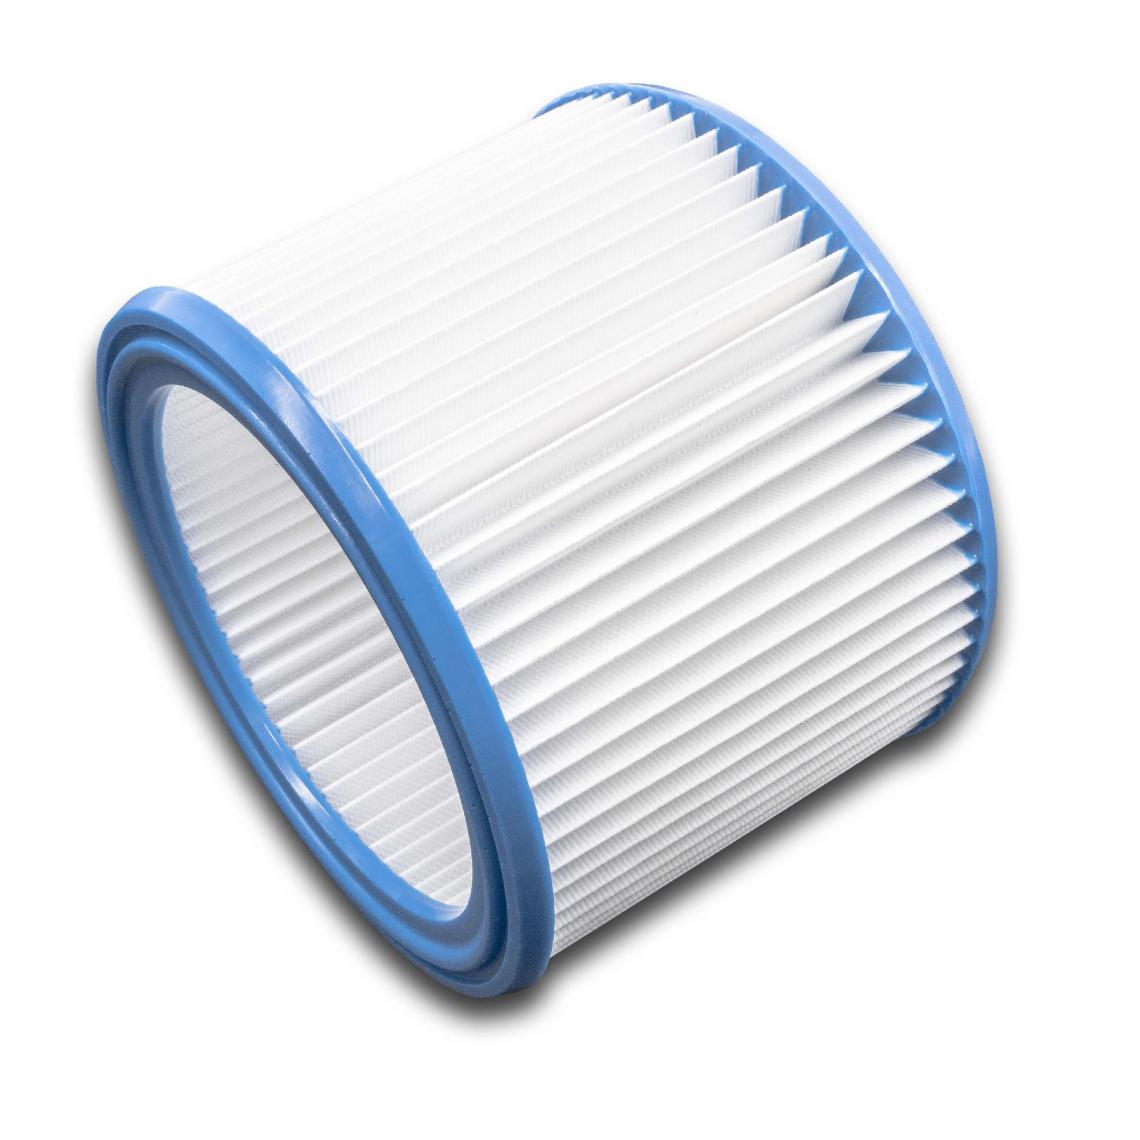 Vhbw - vhbw Set de filtres 5x Filtre plissé compatible avec Nilfisk Attix 751-21, 791-21 EC, 791-2M/B1 aspirateur à sec ou humide - Filtre à cartouche - Accessoire entretien des sols